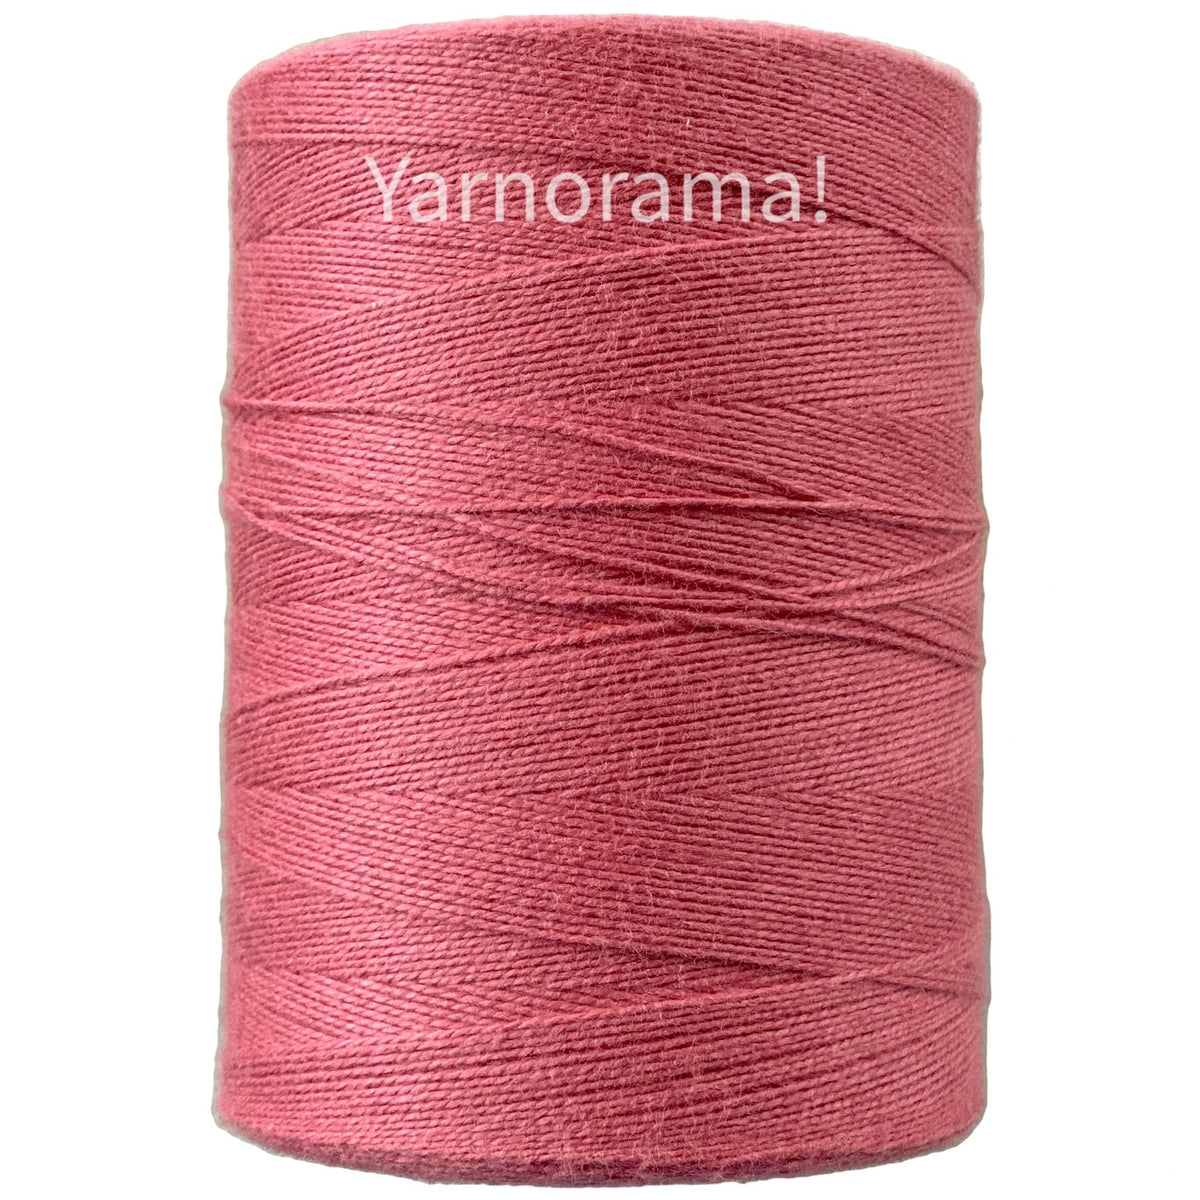 16/2 Unmercerized Cotton - Maurice Brassard-Weaving Yarn-Dark Salmon - 985-Yarnorama